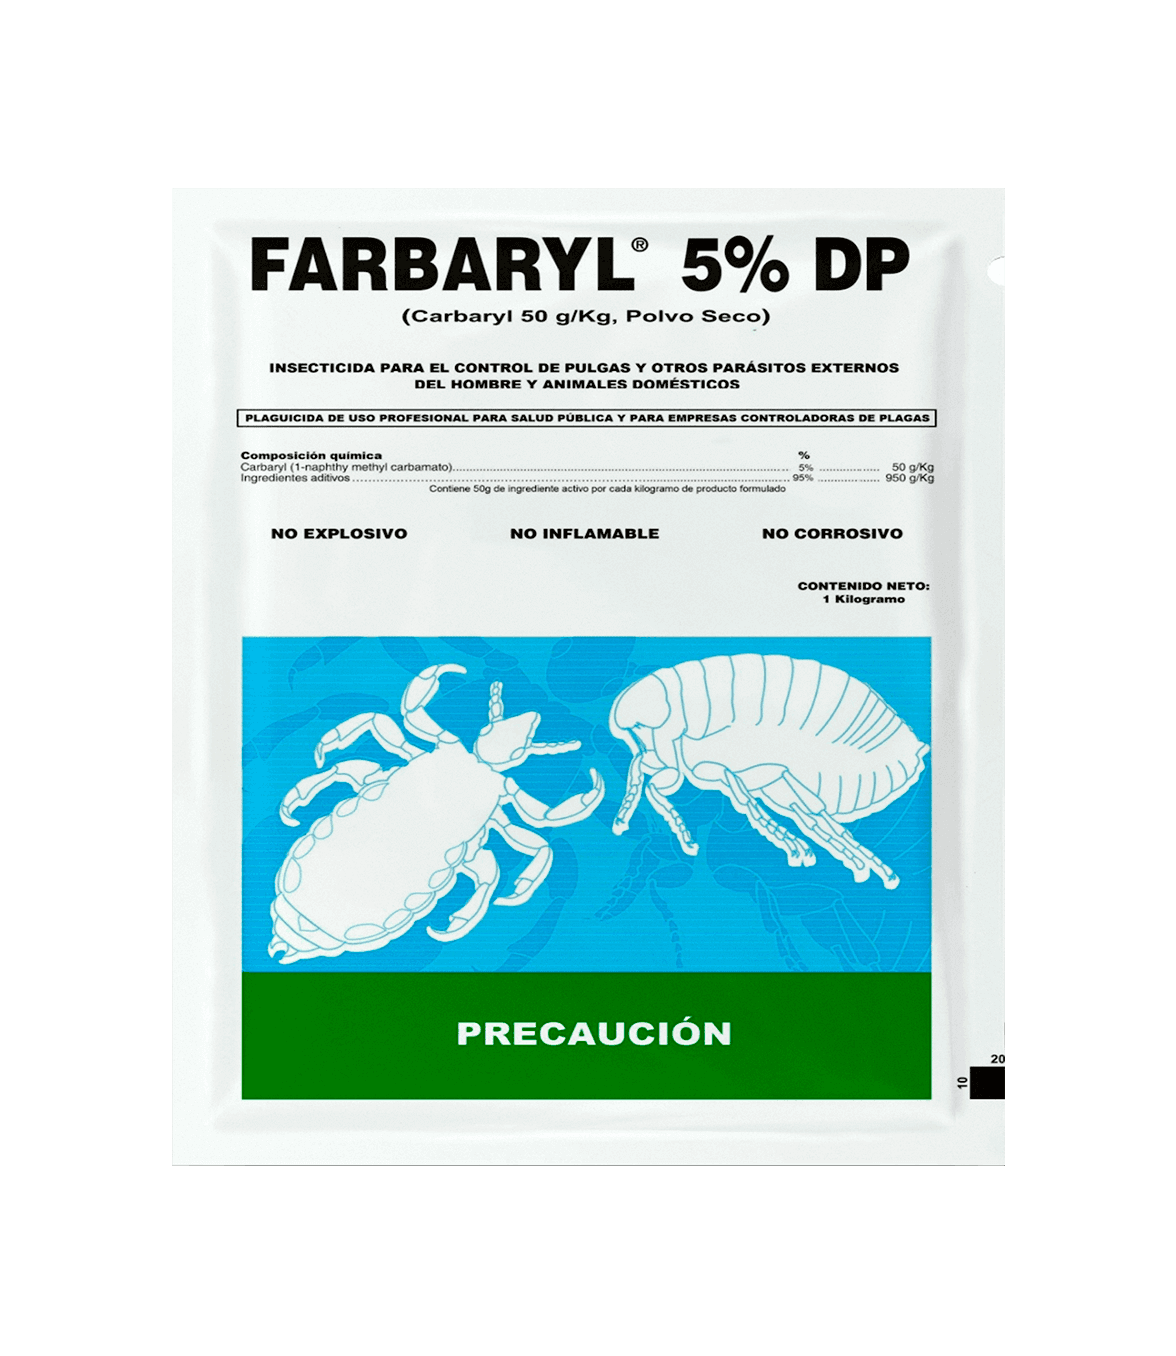 Farbaryl 5% DP